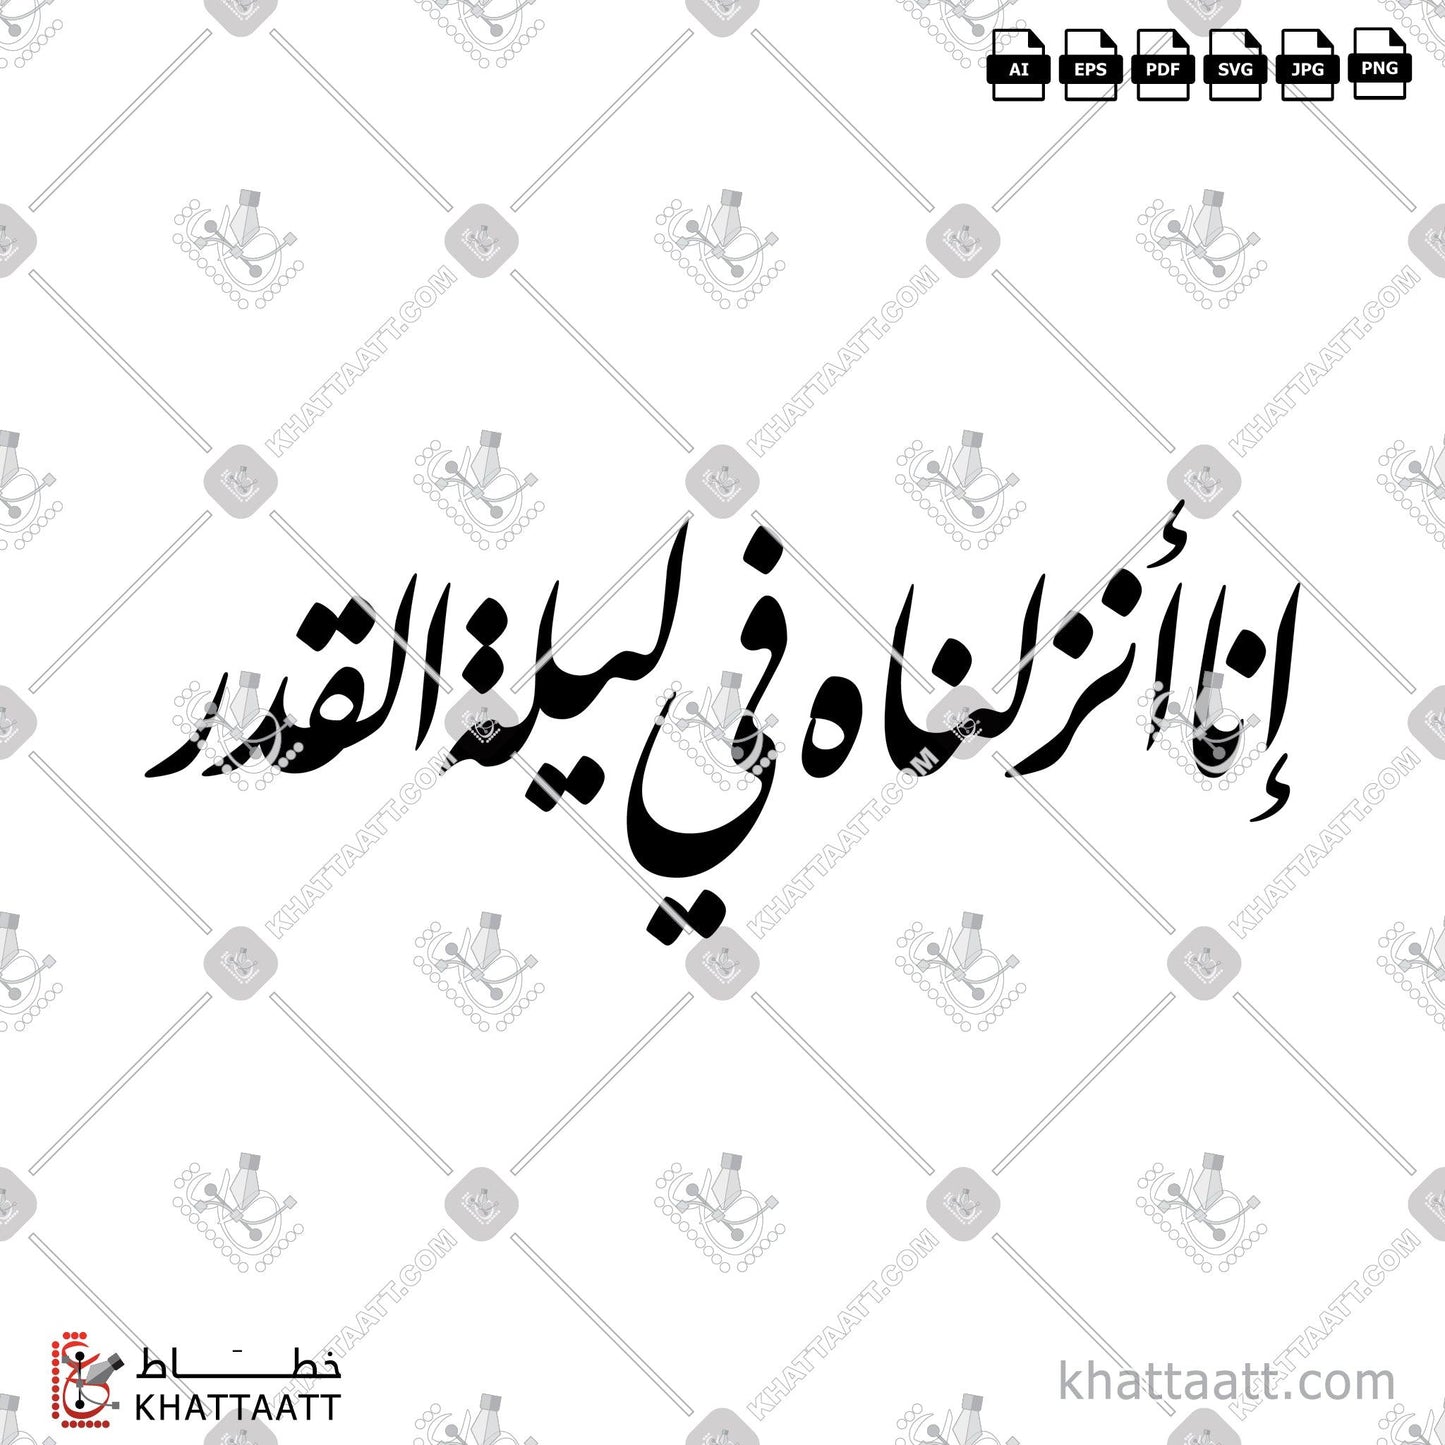 Download Arabic Calligraphy of إنا أنزلناه في ليلة القدر in Farsi - الخط الفارسي in vector and .png